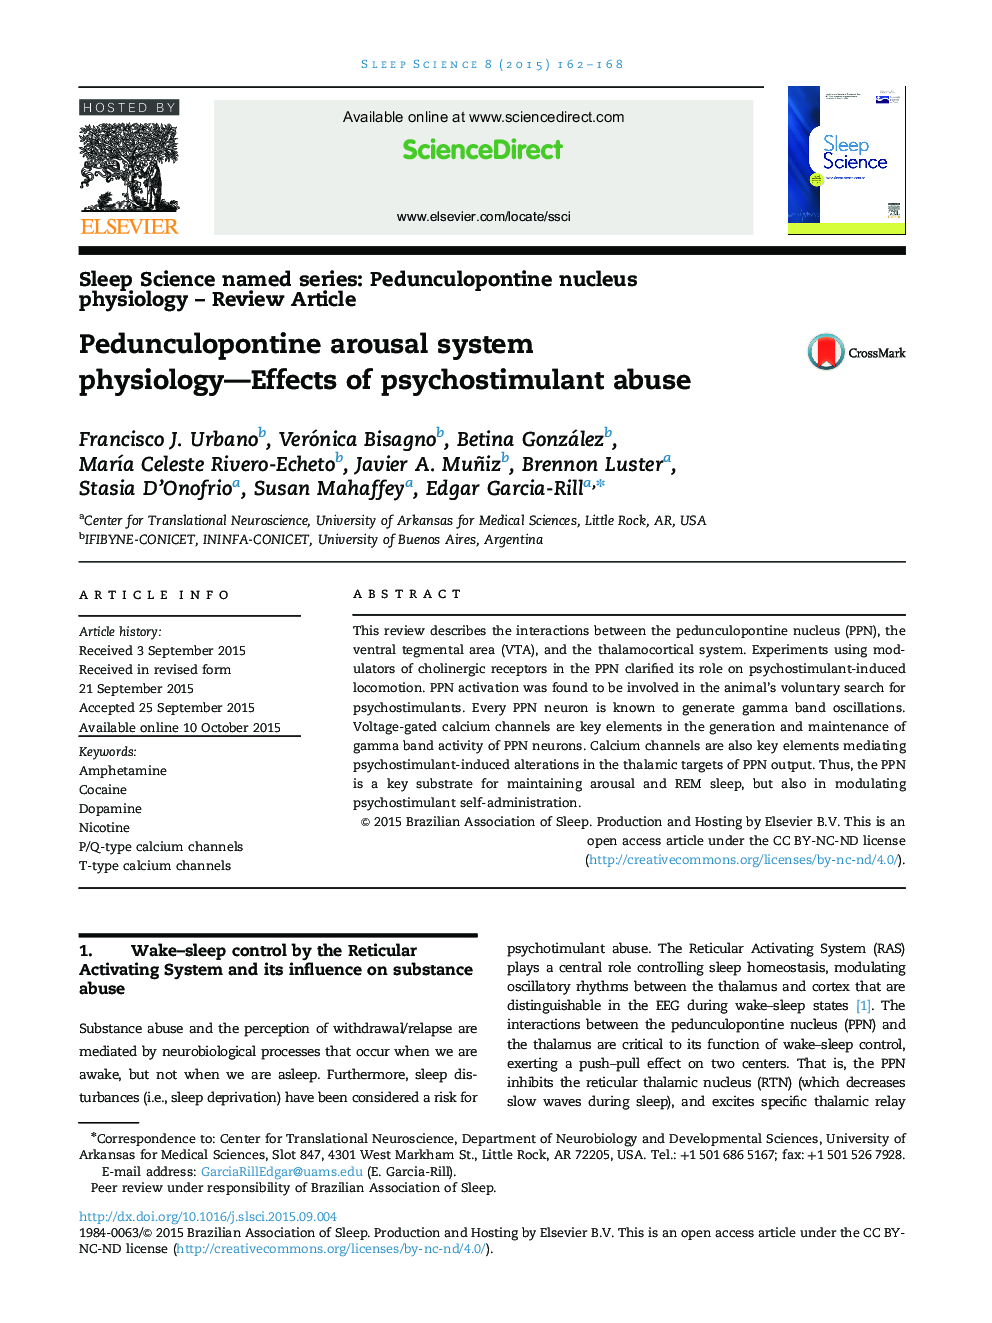 Pedunculopontine arousal system physiology—Effects of psychostimulant abuse 